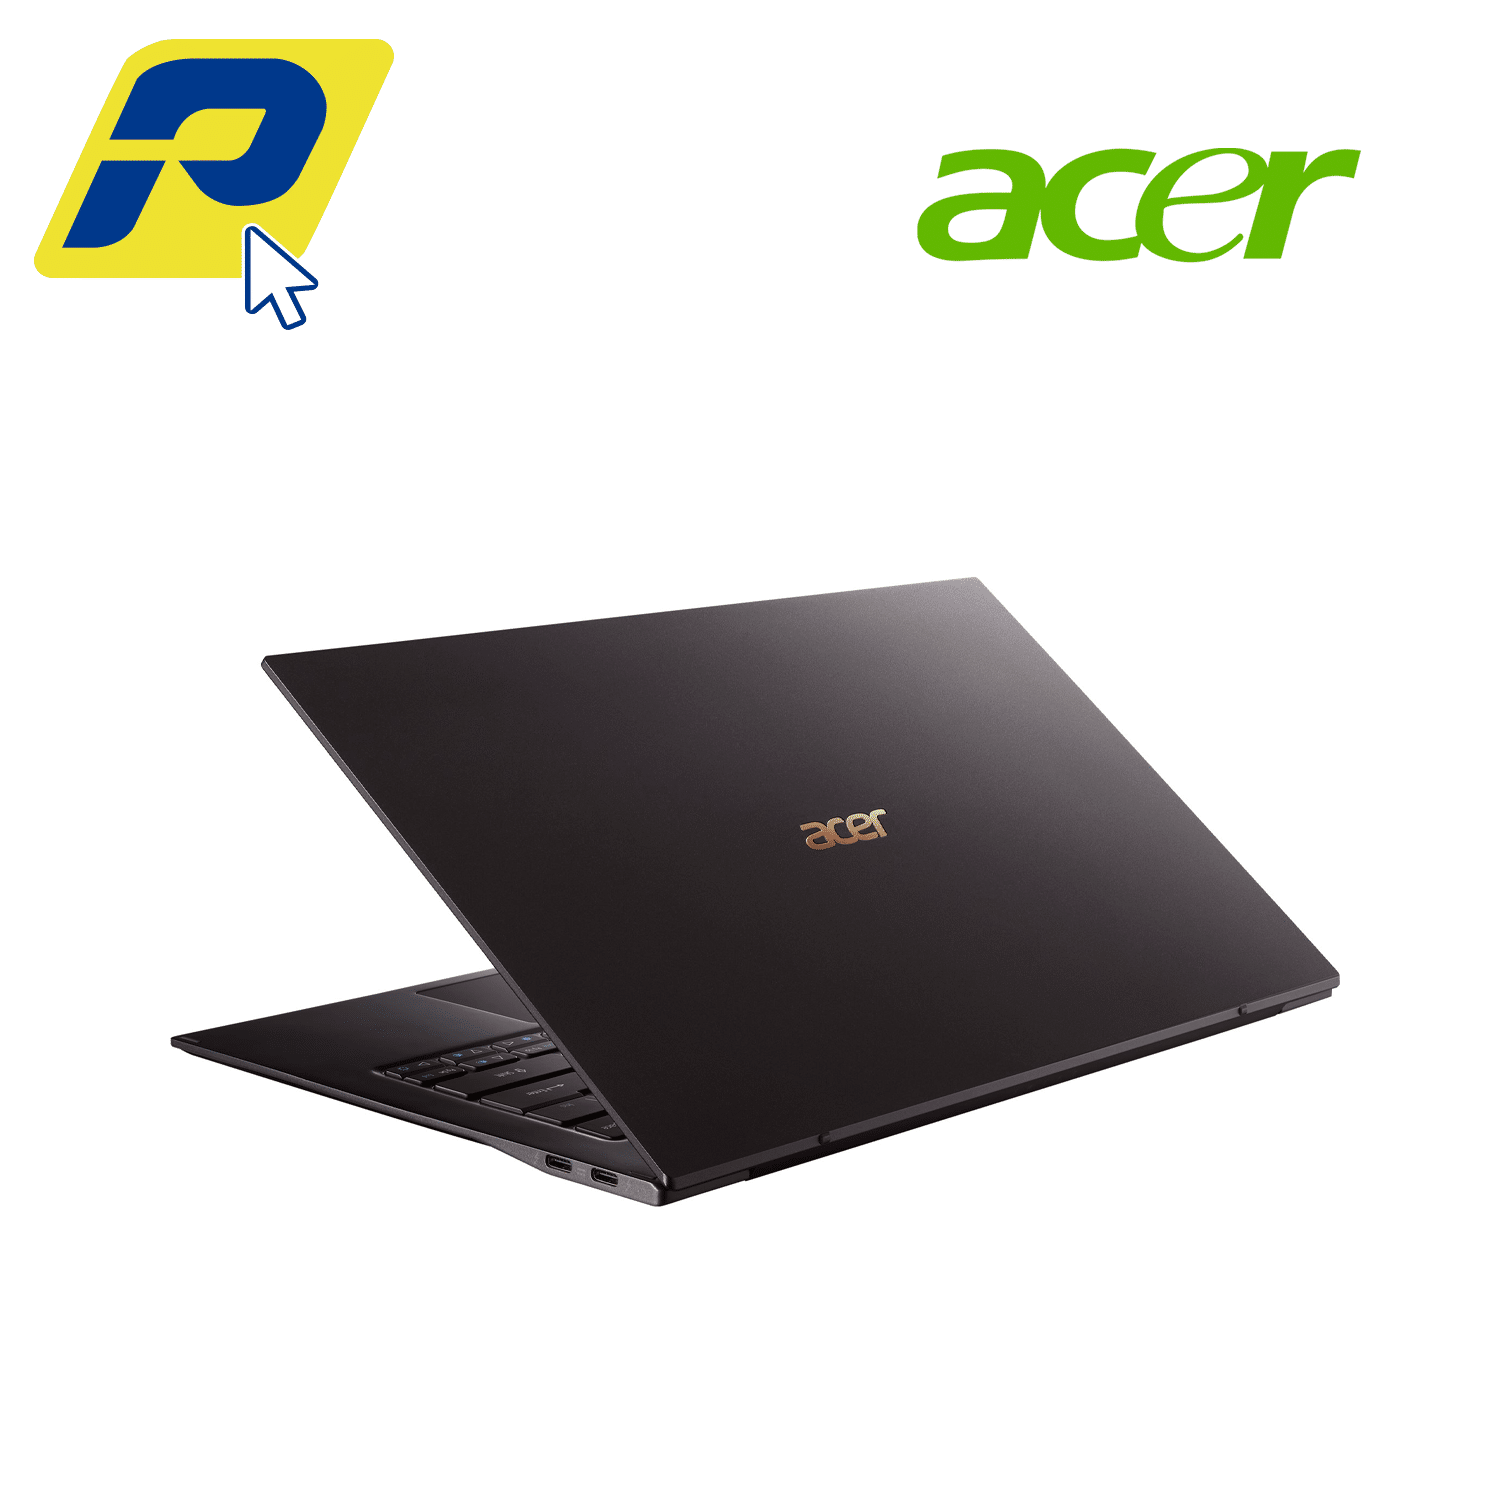 Laptop ACER NX H98AA003 i7 MC 3